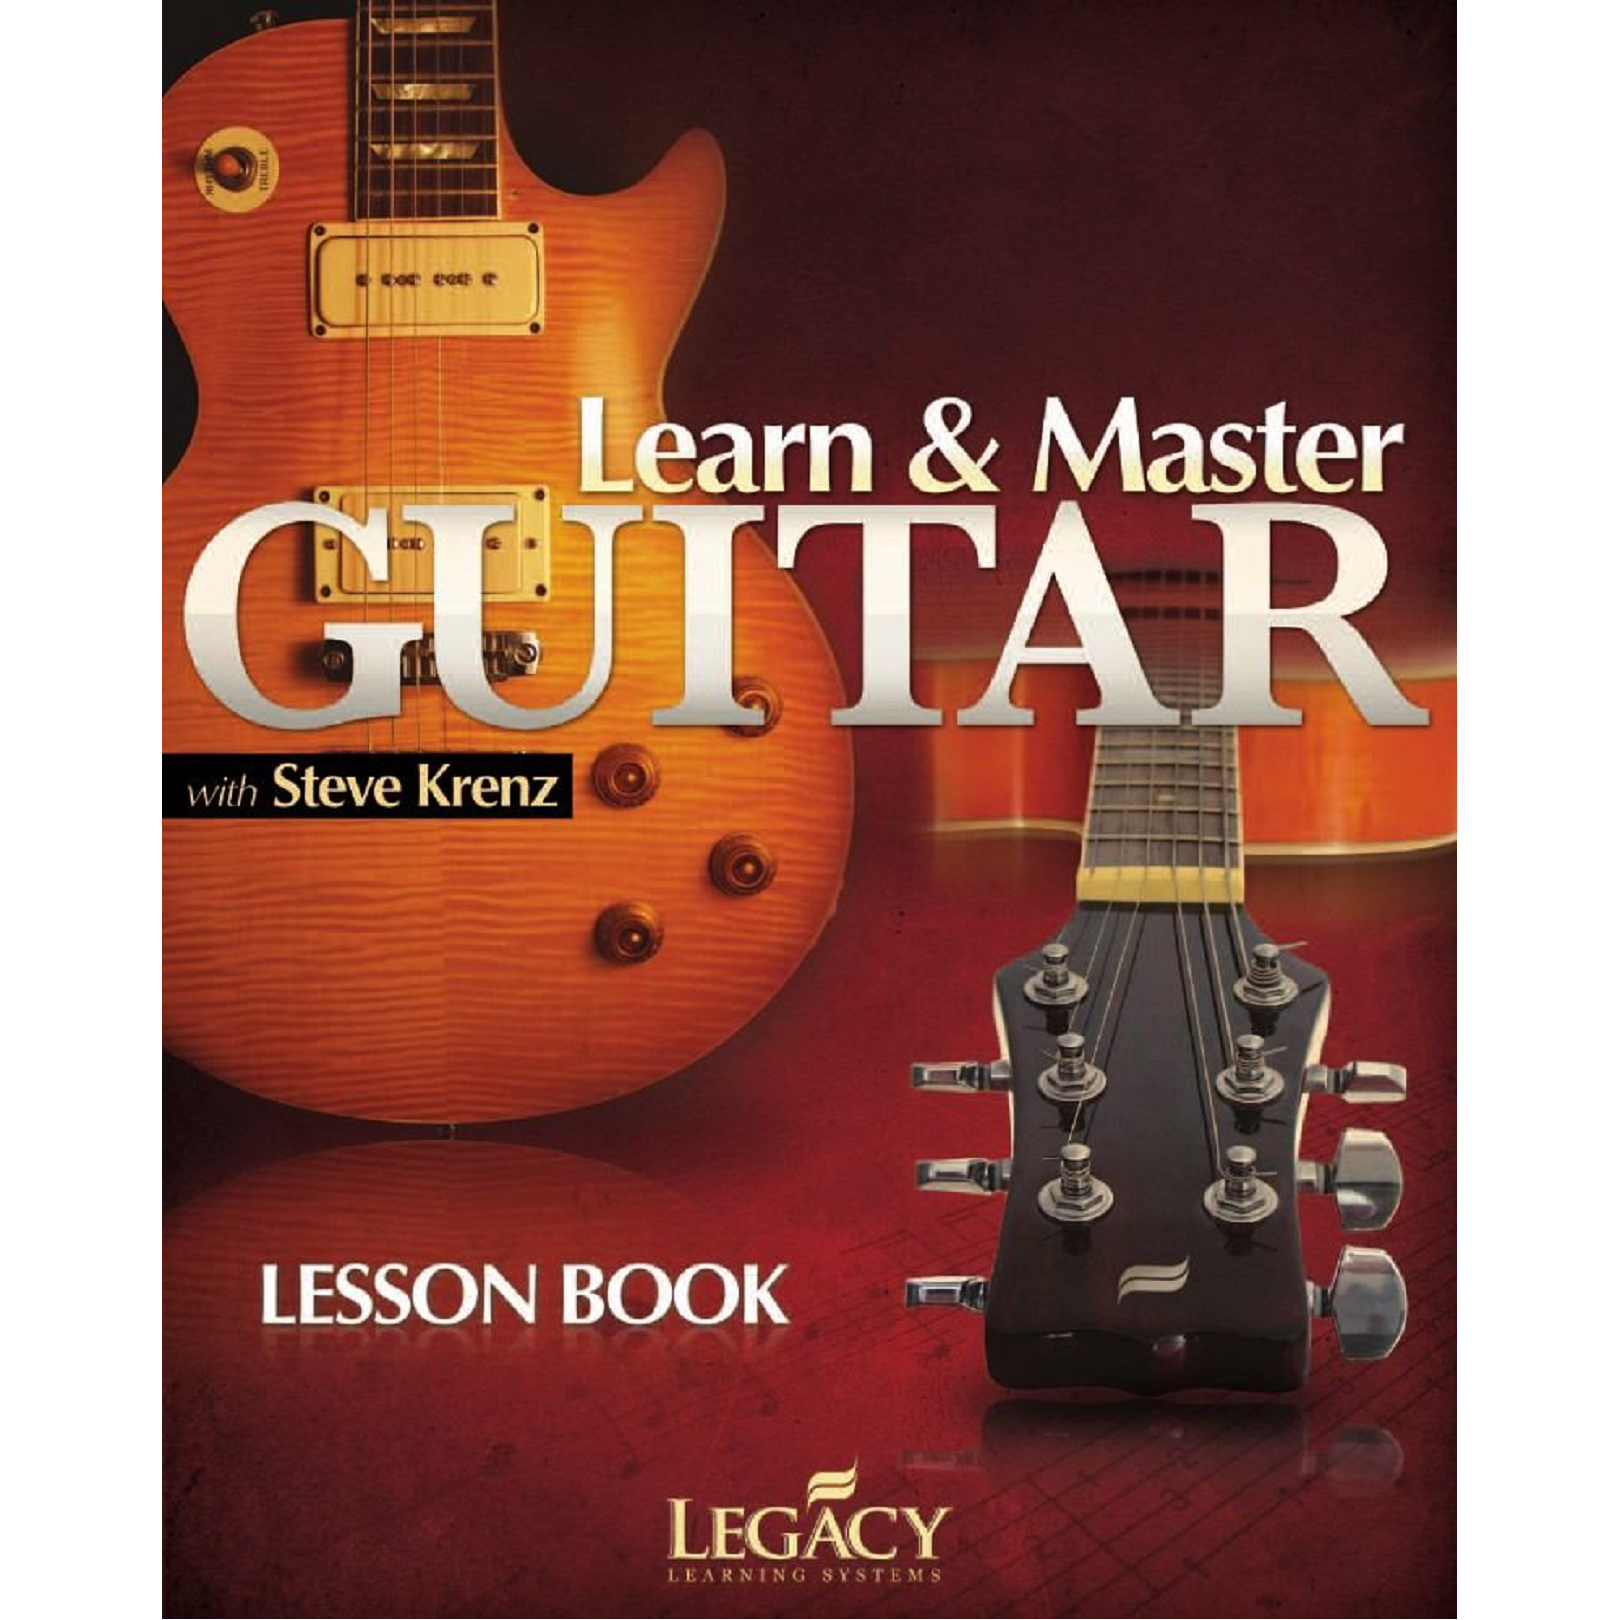 Learn Master Guitar tiếng việt – Steve Krenz